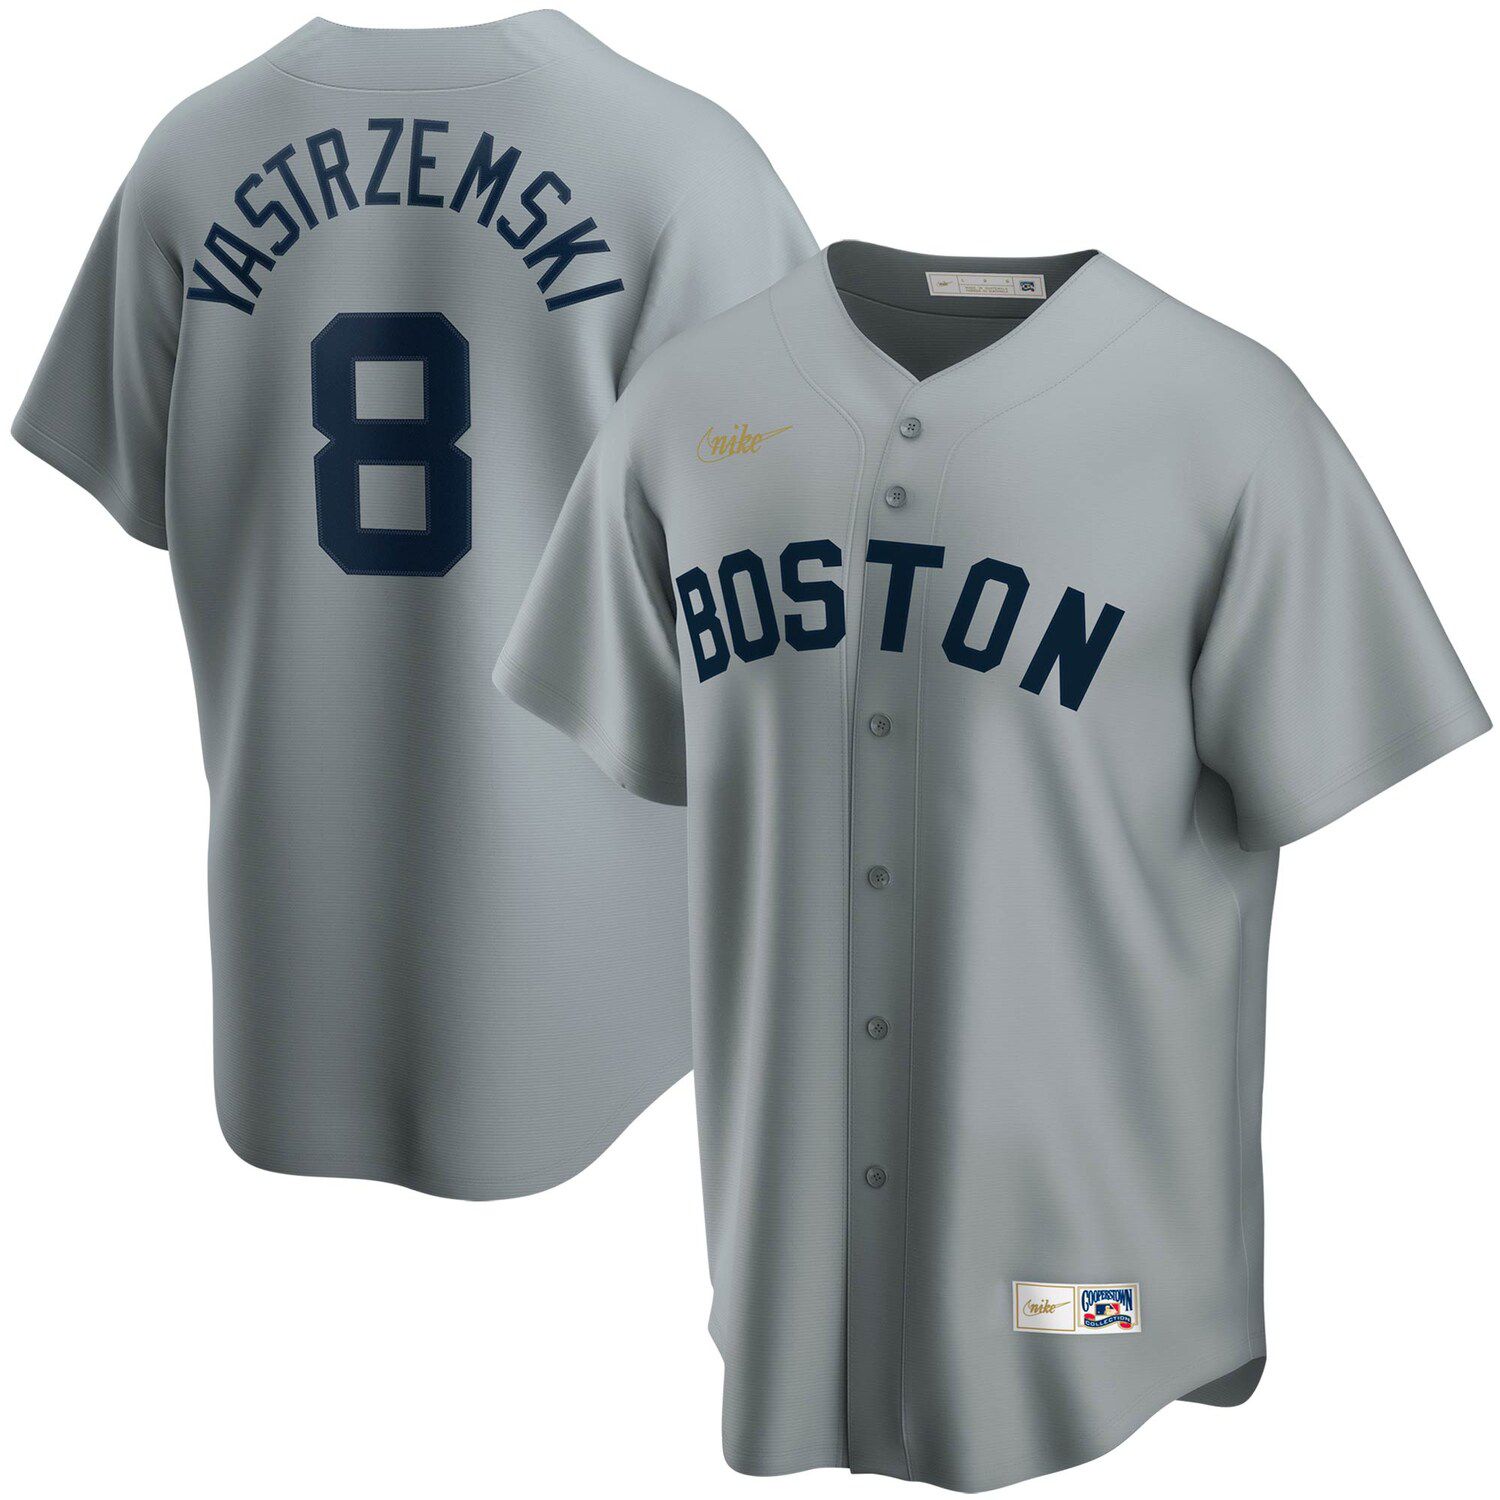 boston gray jersey